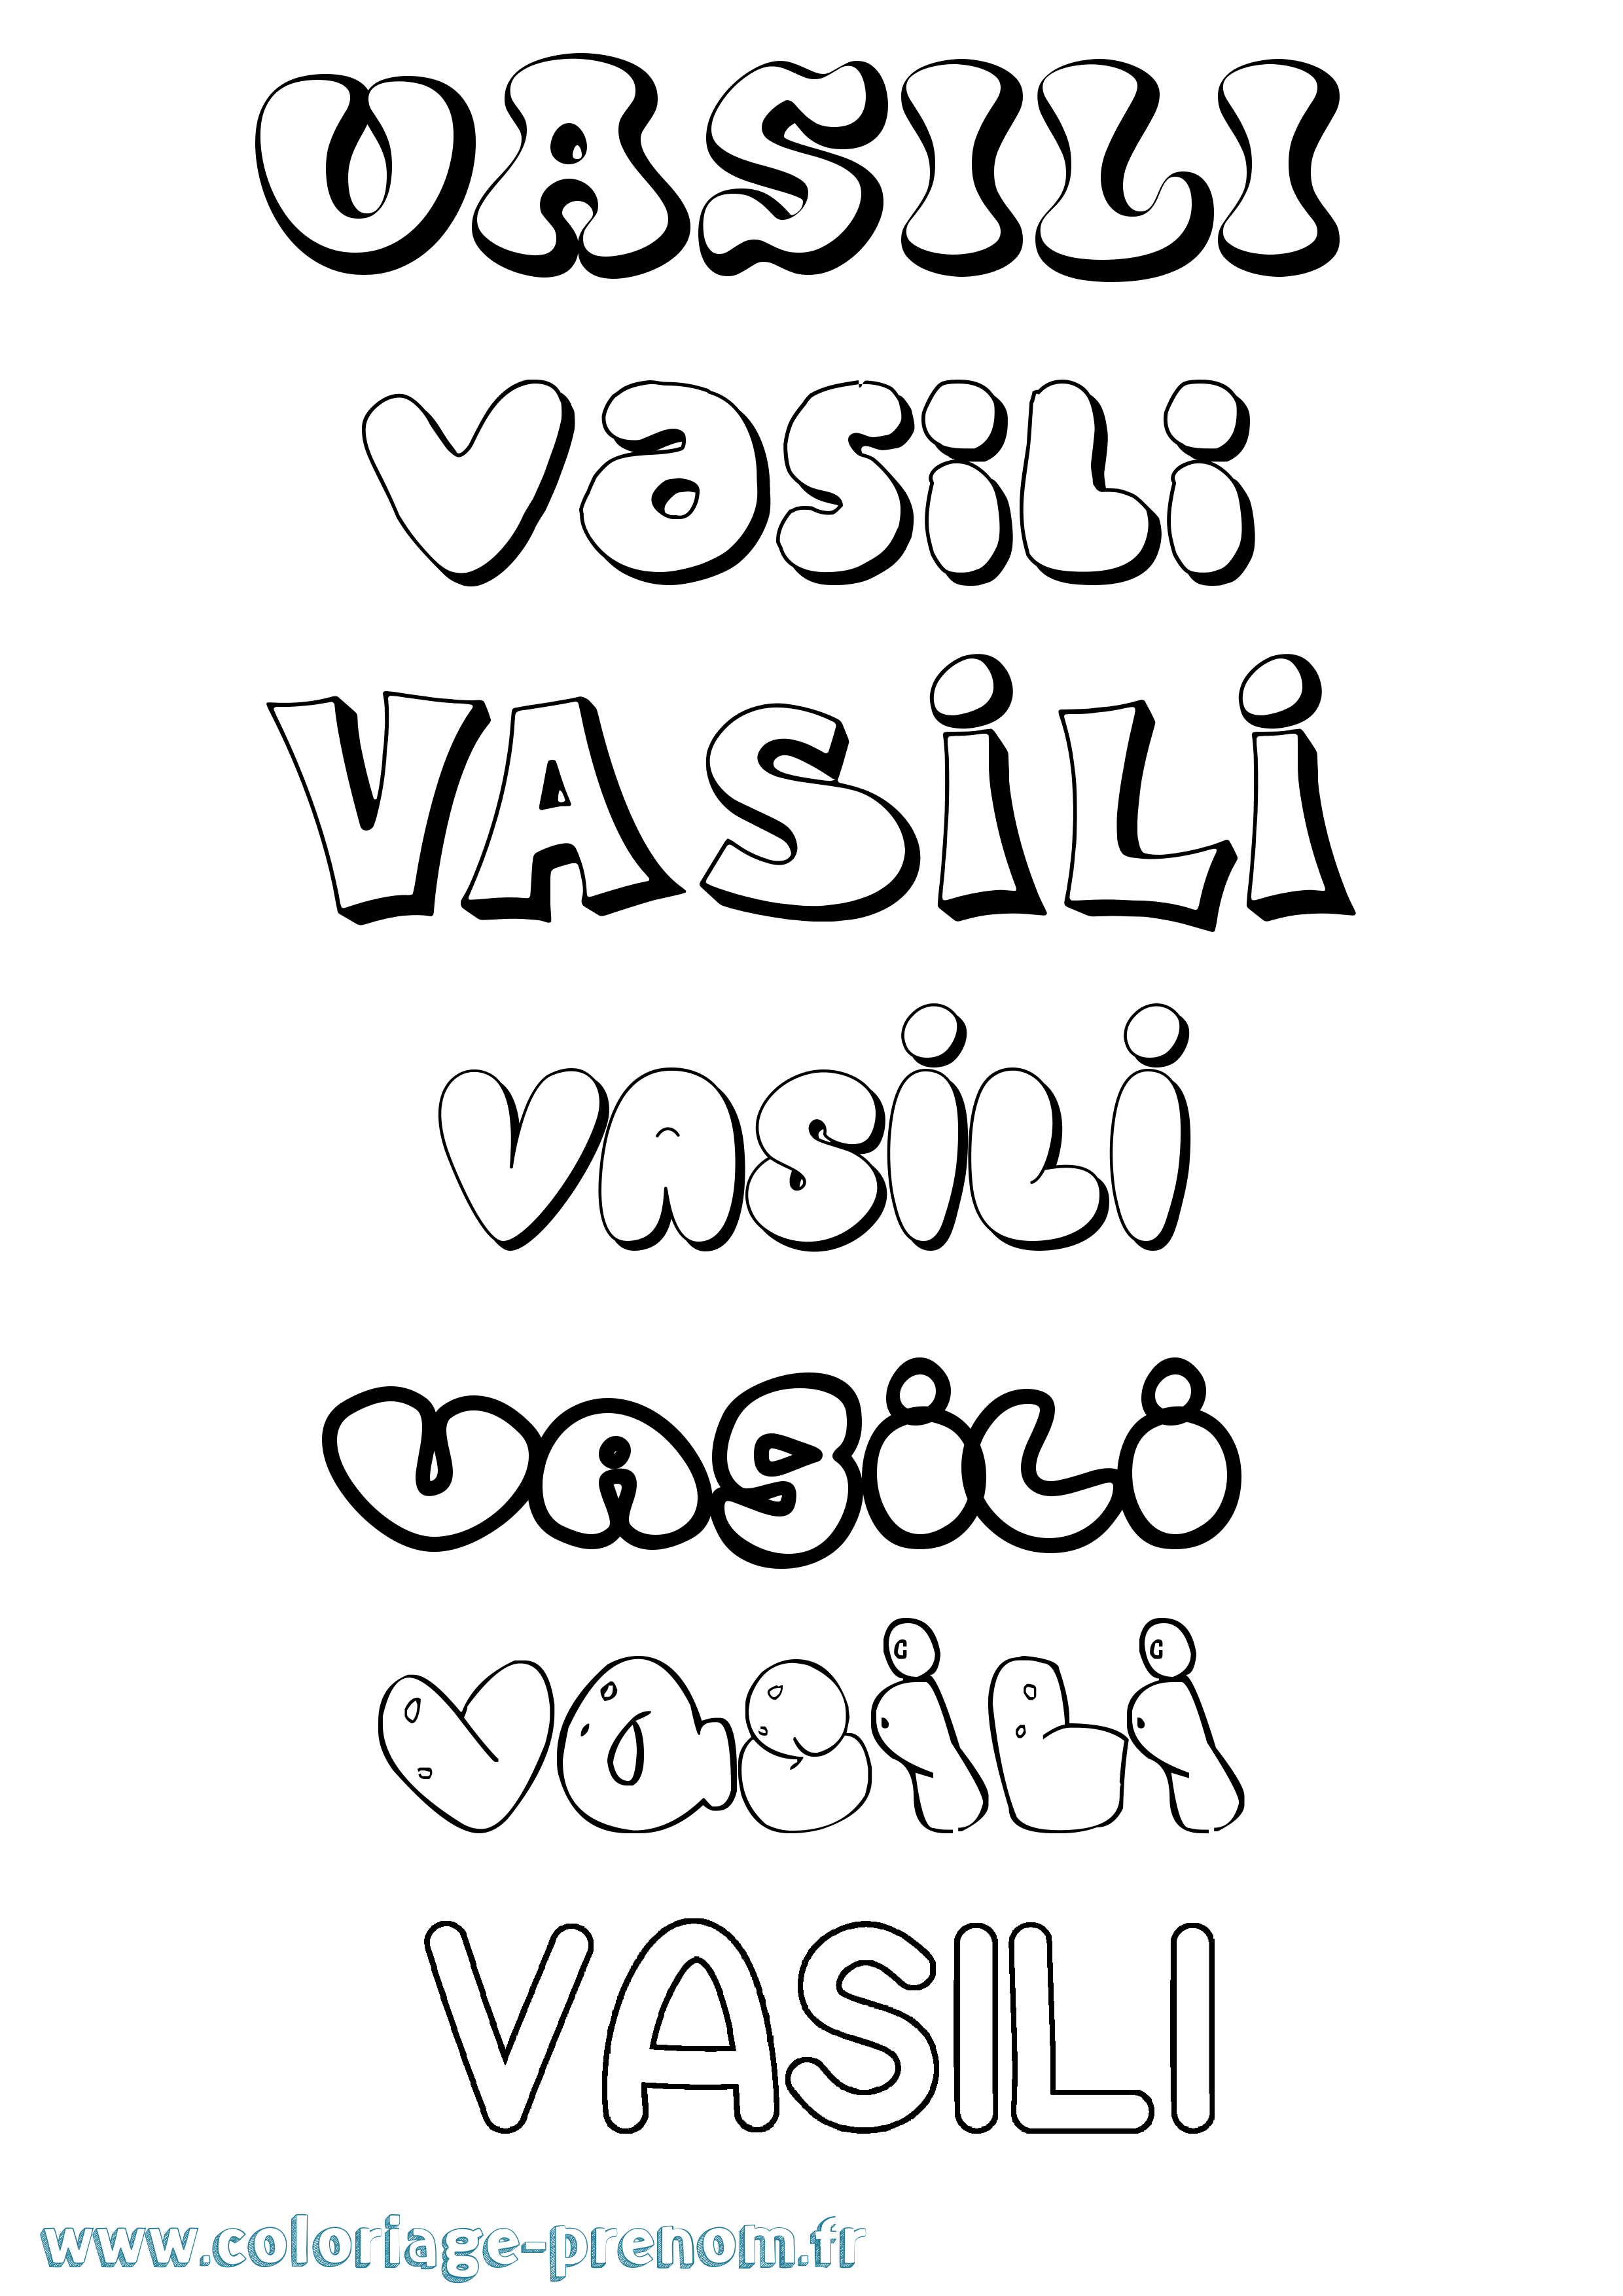 Coloriage prénom Vasili Bubble